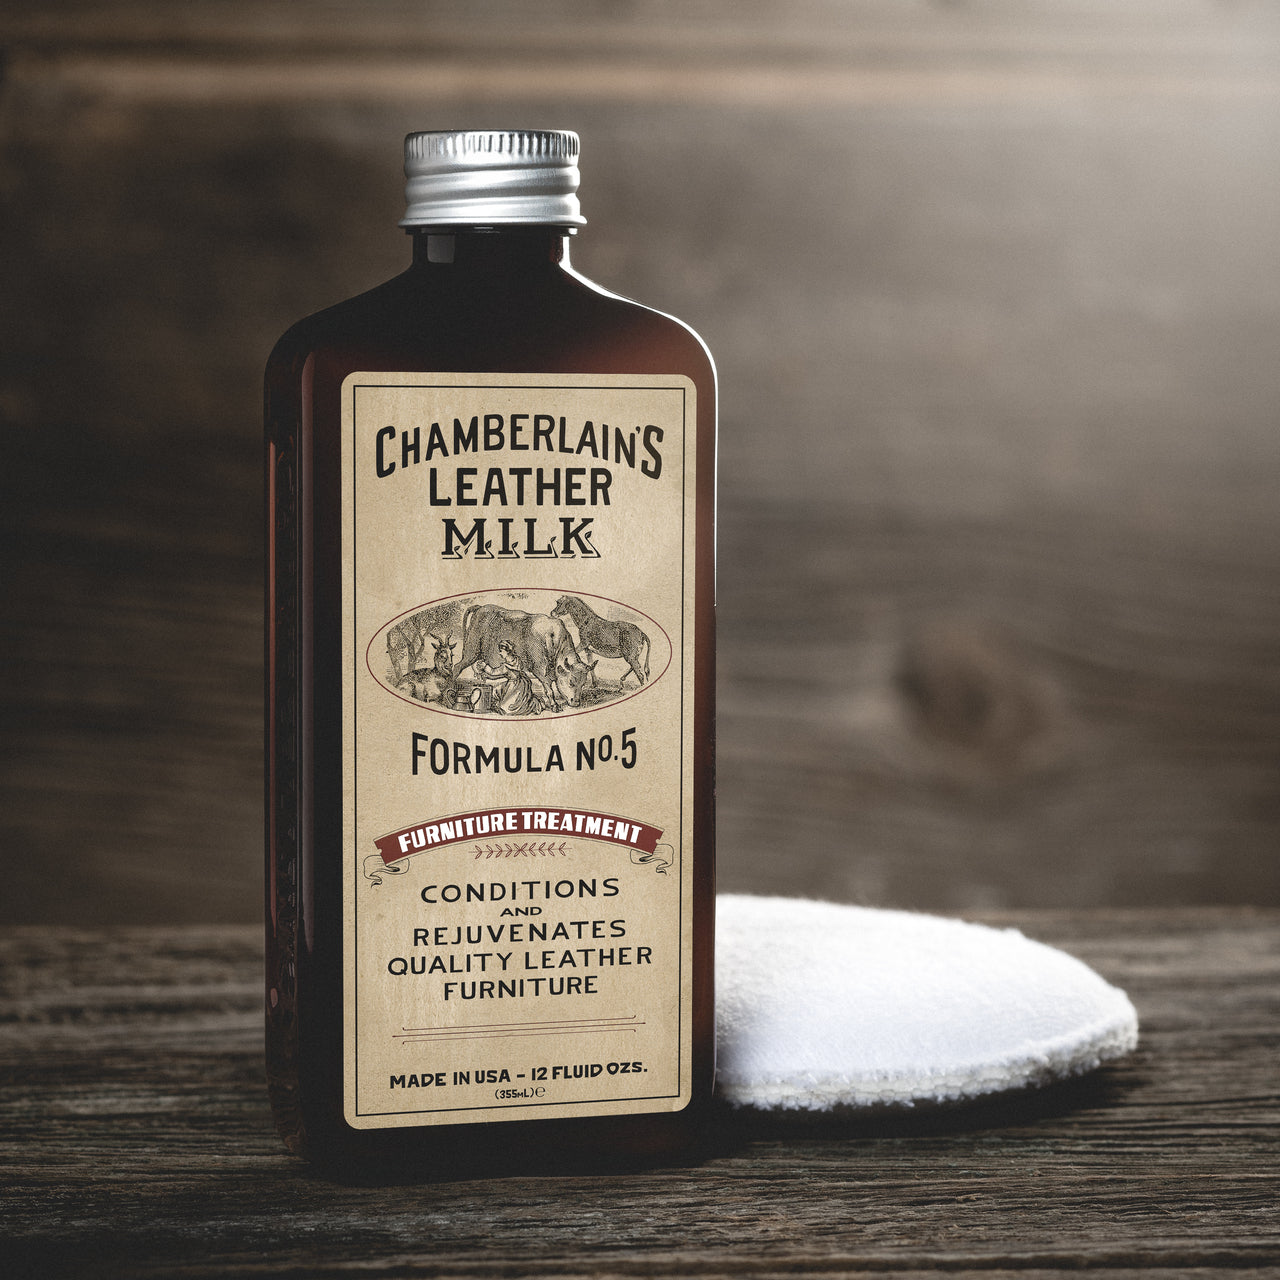 Chamberlain's Leather Milk - Formula No. 5 Furniture Treatment